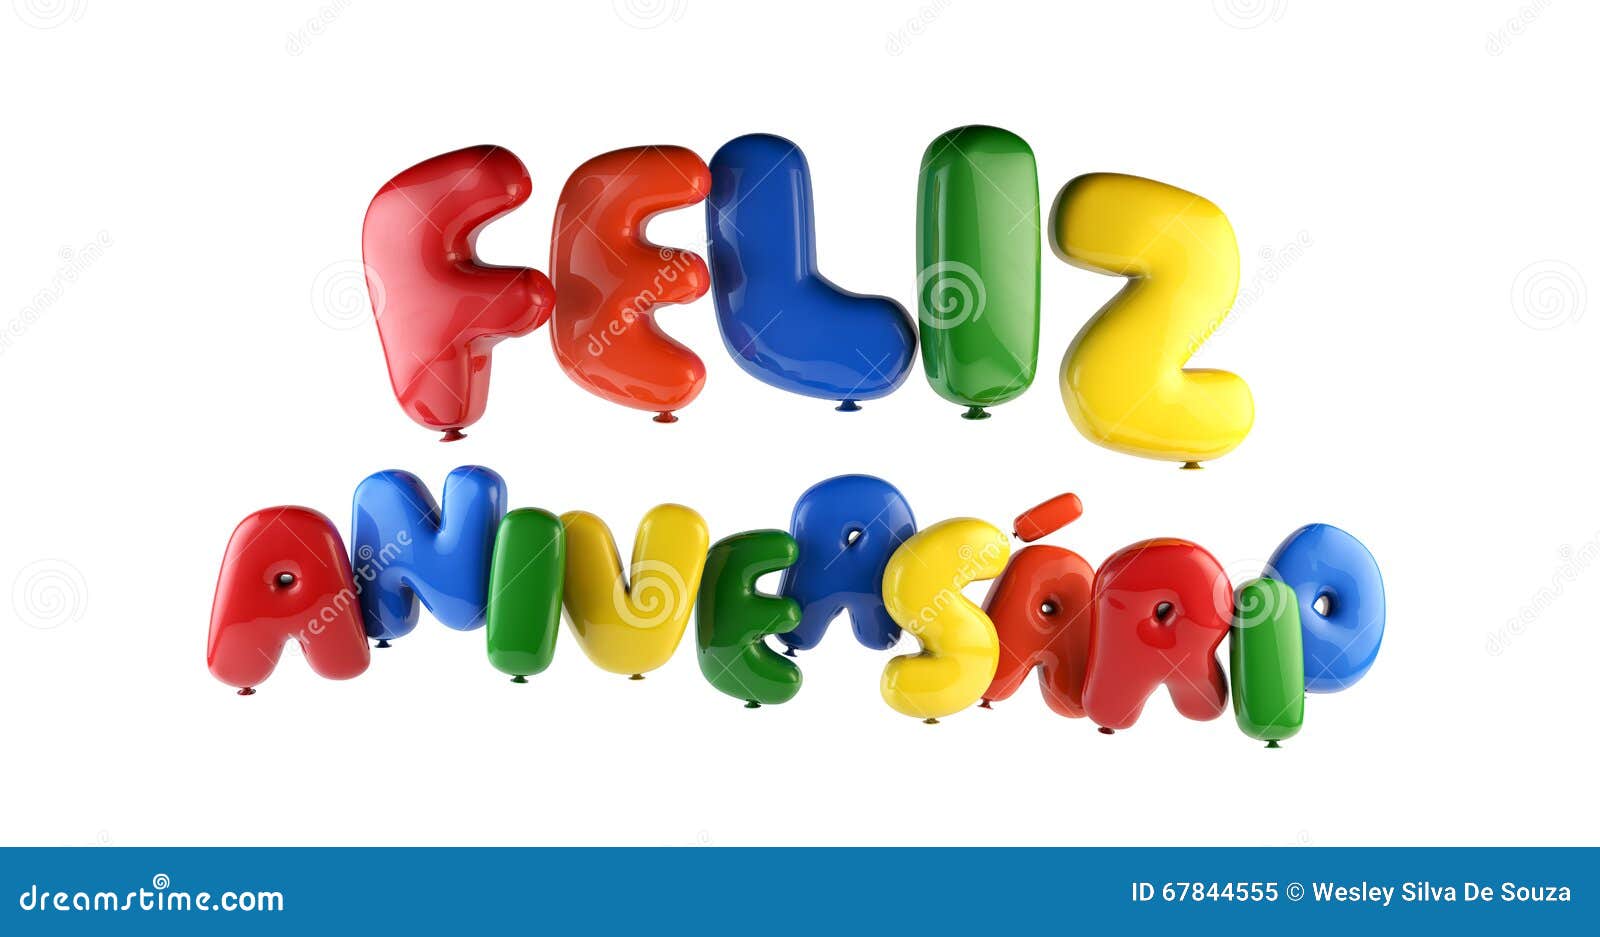 feliz aniversario portuguese happy birthday - font ballon